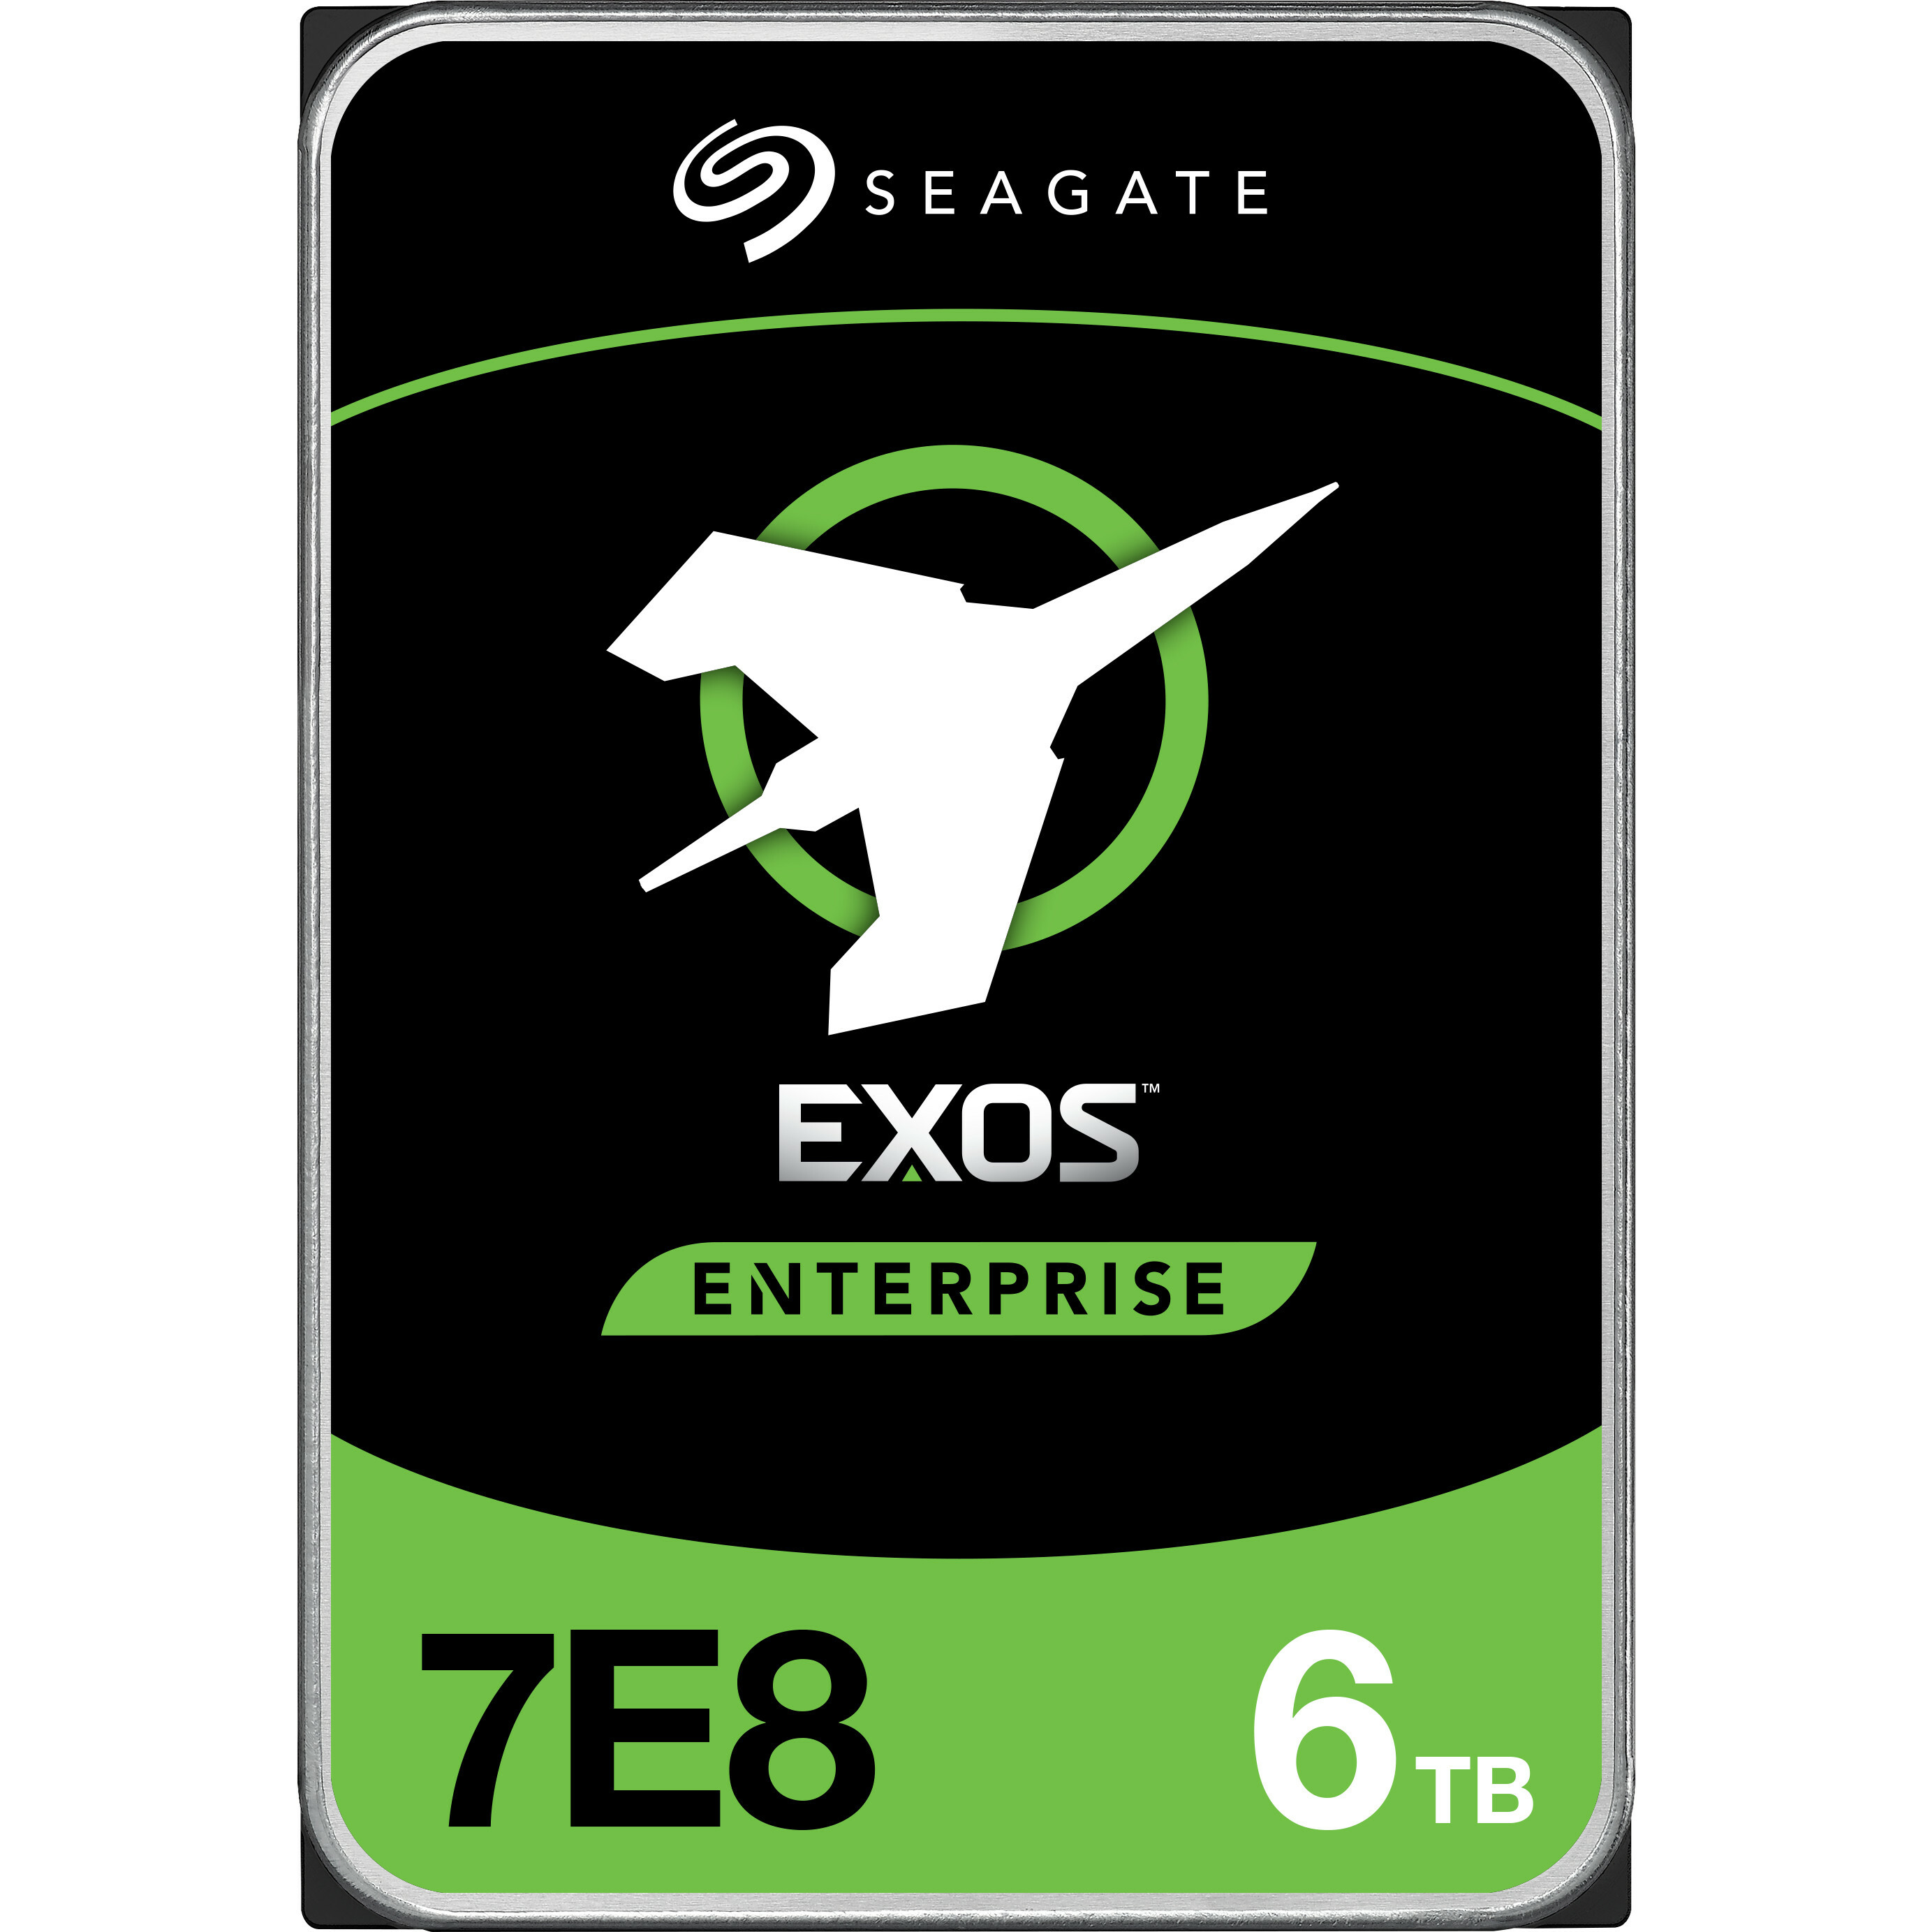 Seagate Exos 7E8 ST6000NM002A - Hard drive - 6 TB - internal - 3.5" - SATA 6Gb/s - 7200 rpm - buffer: 256 MB - image 4 of 4